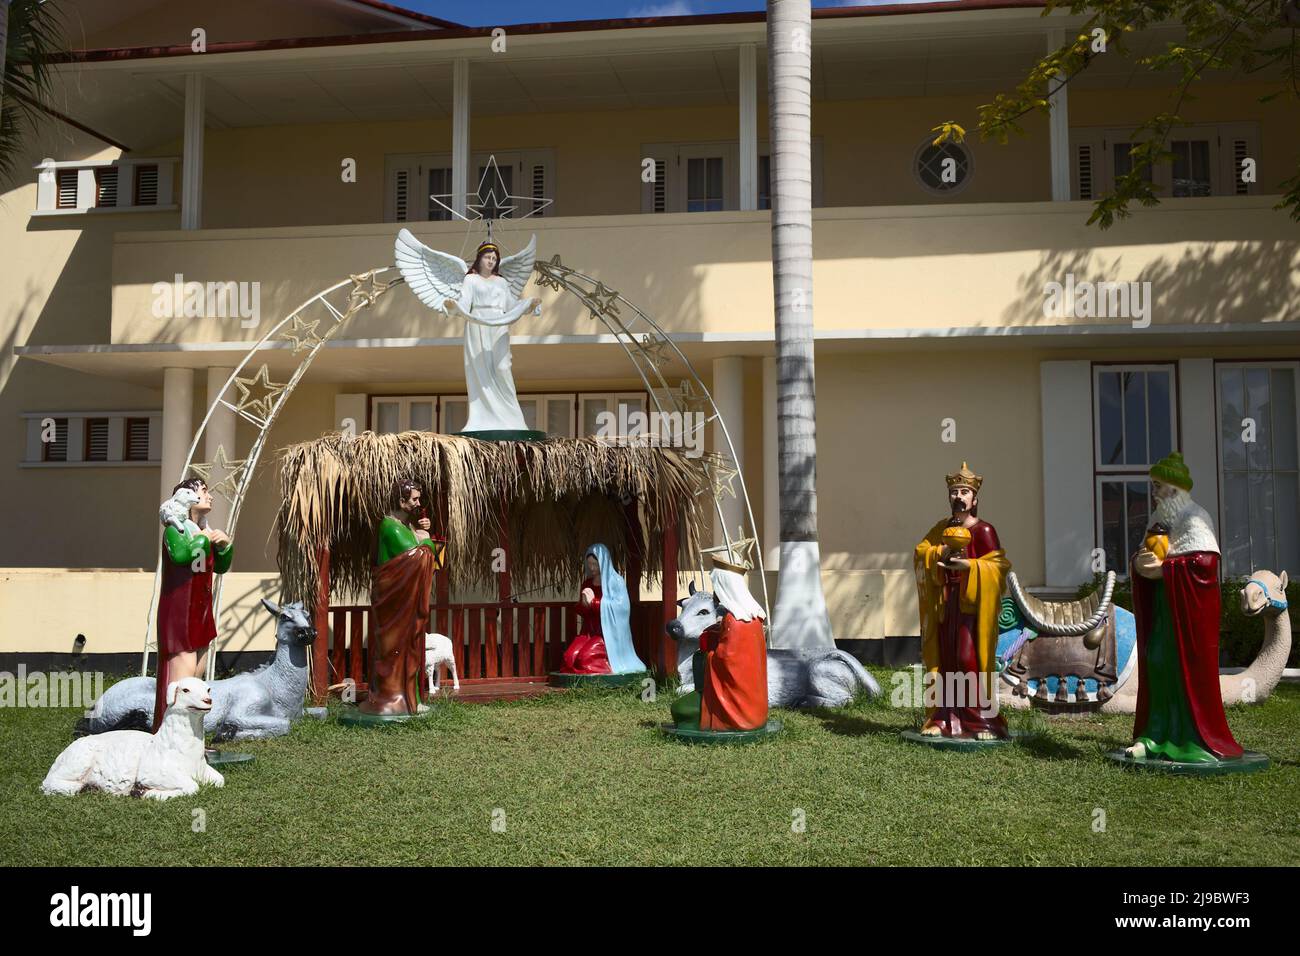 ORANJESTAD, ARUBA - DECEMBER 20, 2020: Nativity scene outside the Parliament building along L. G. Smith Blvd in the city center of Oranjestad, Aruba Stock Photo